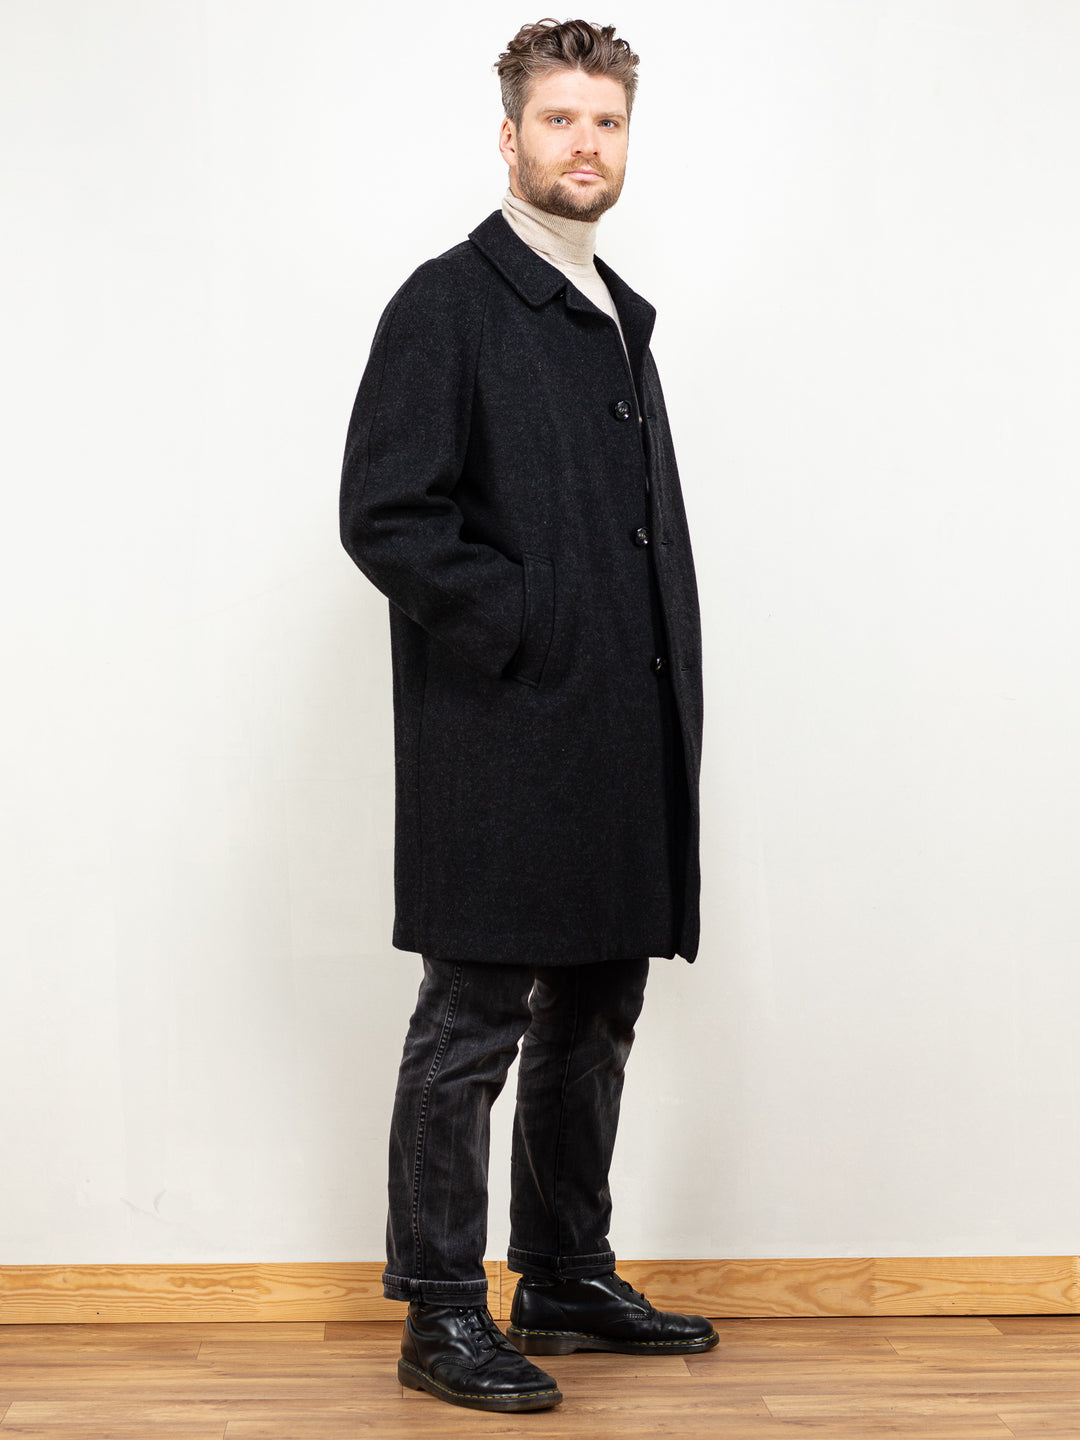 Men Wool Coat 90s black wool overcoat classy vintage men coat 90s classic men minimalistic preppy style sustainable outerwear size large L